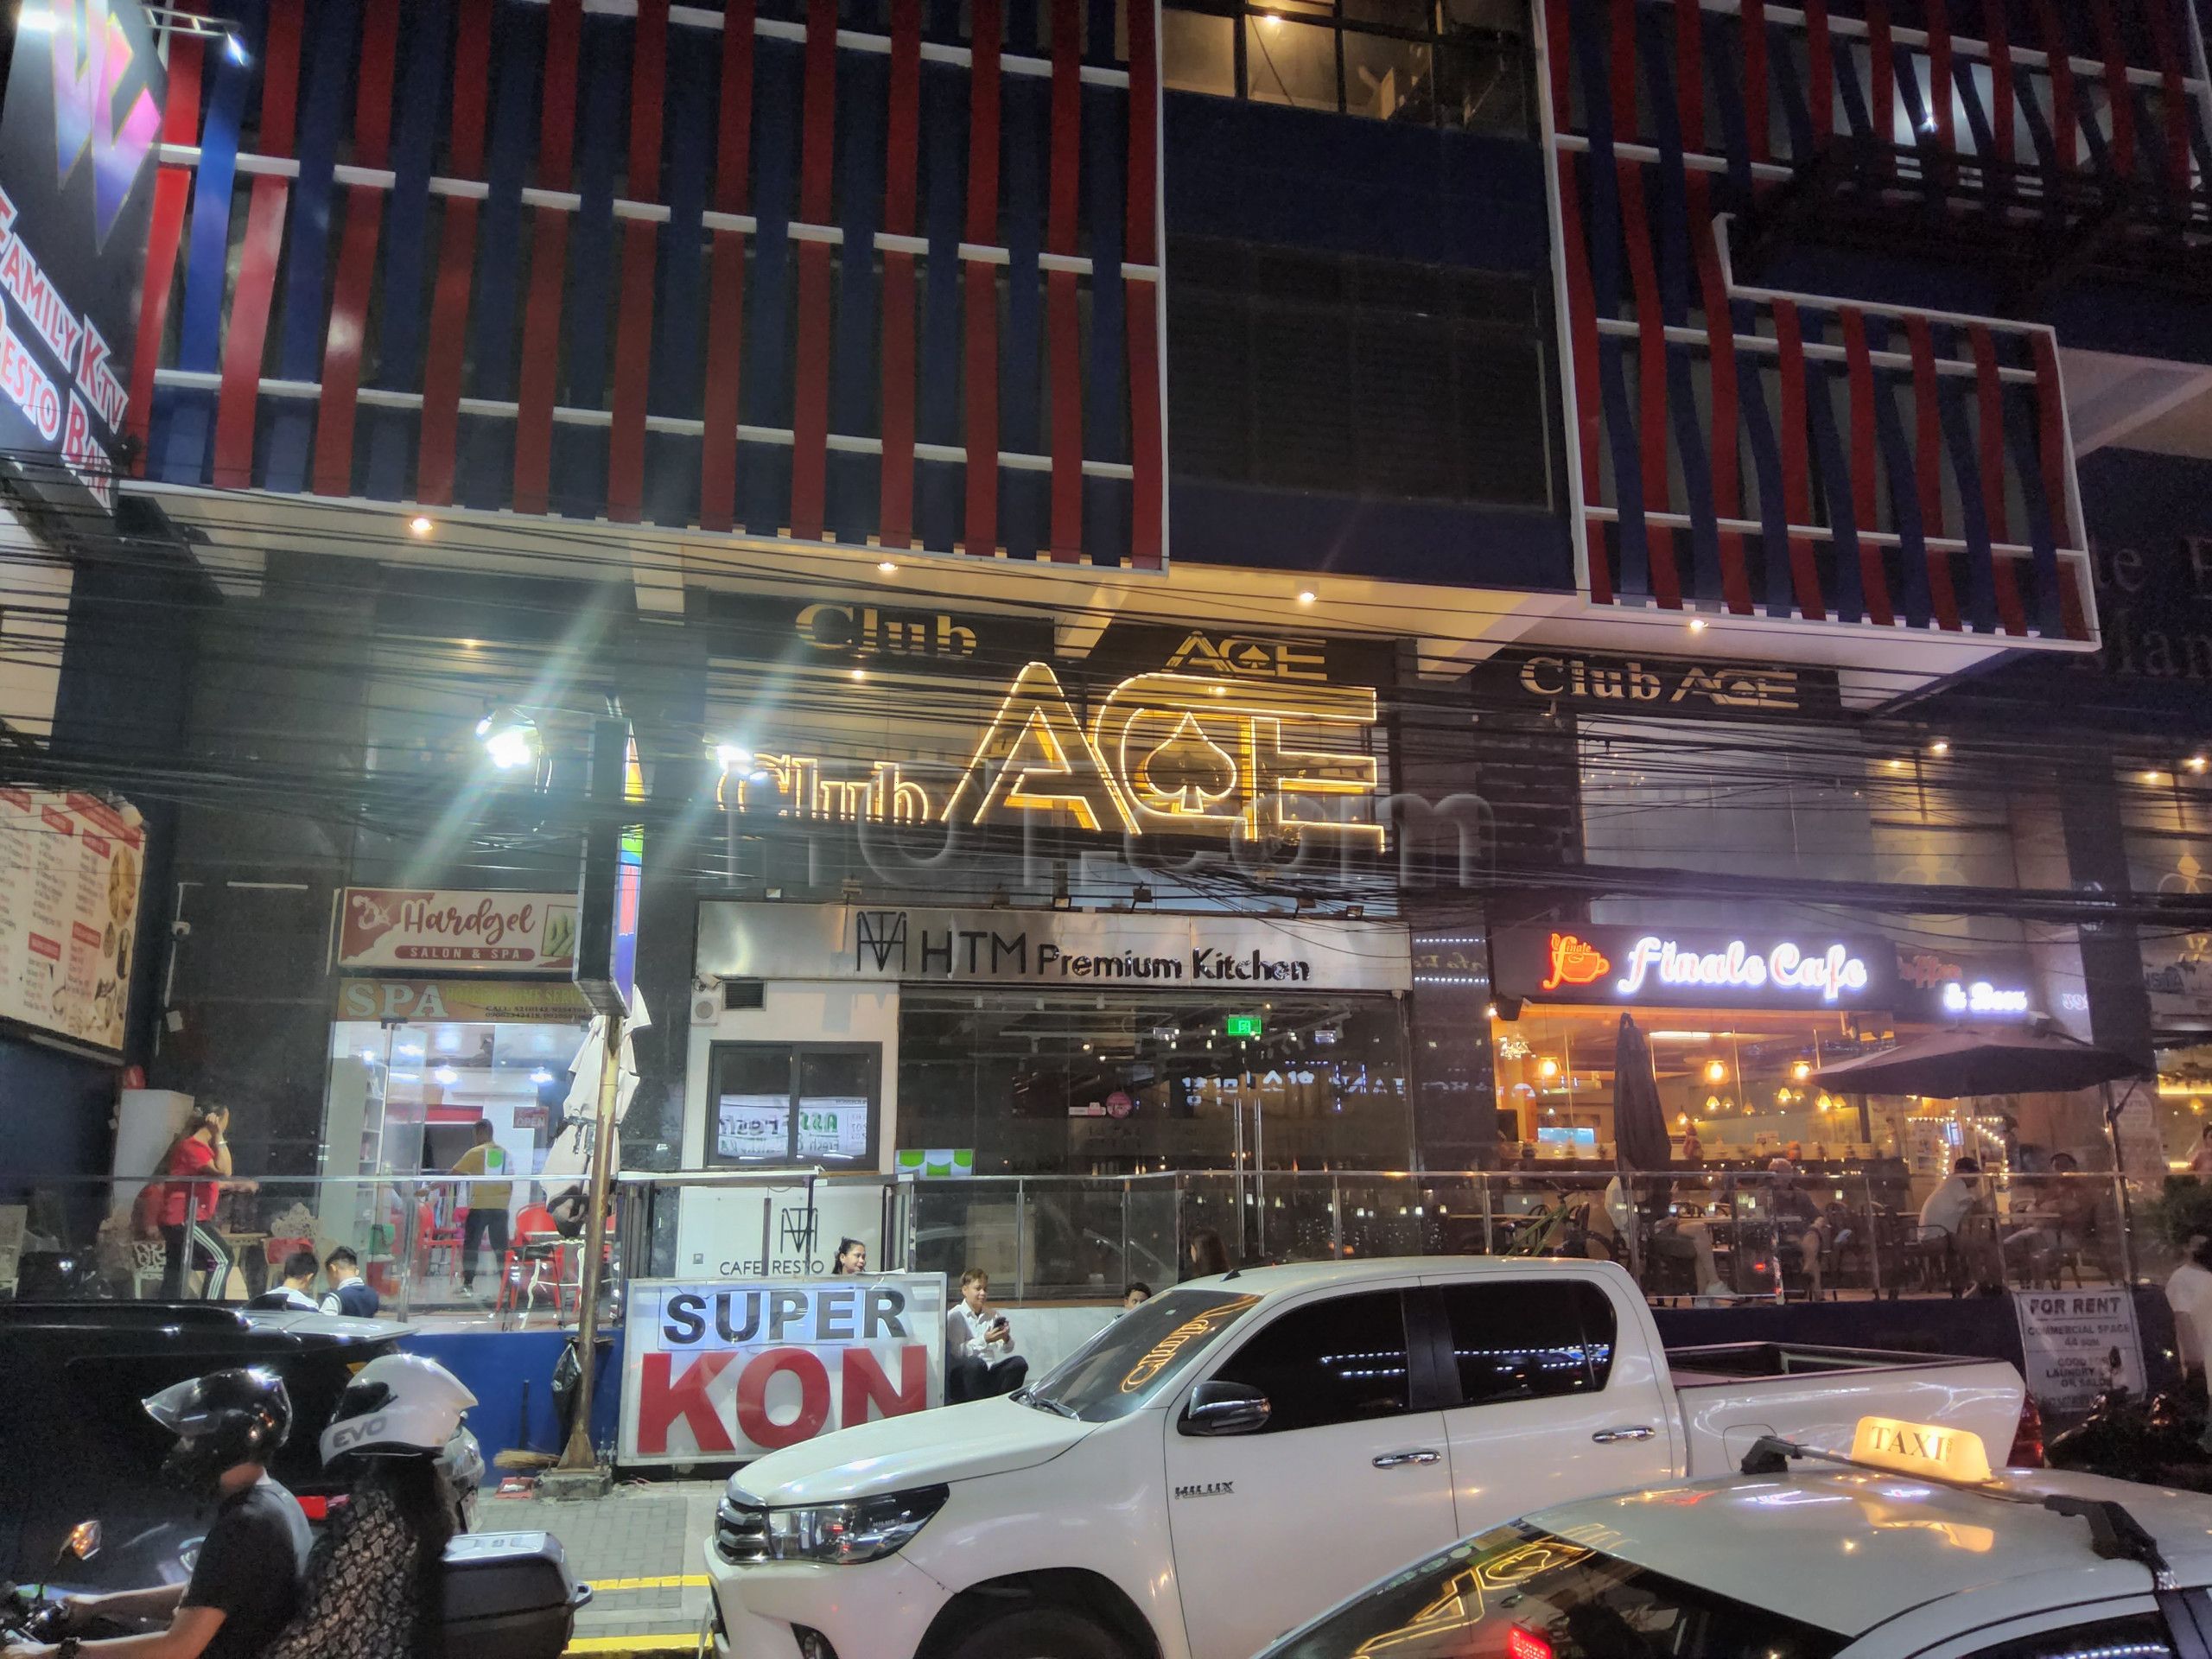 Manila, Philippines Club Ace Jtv